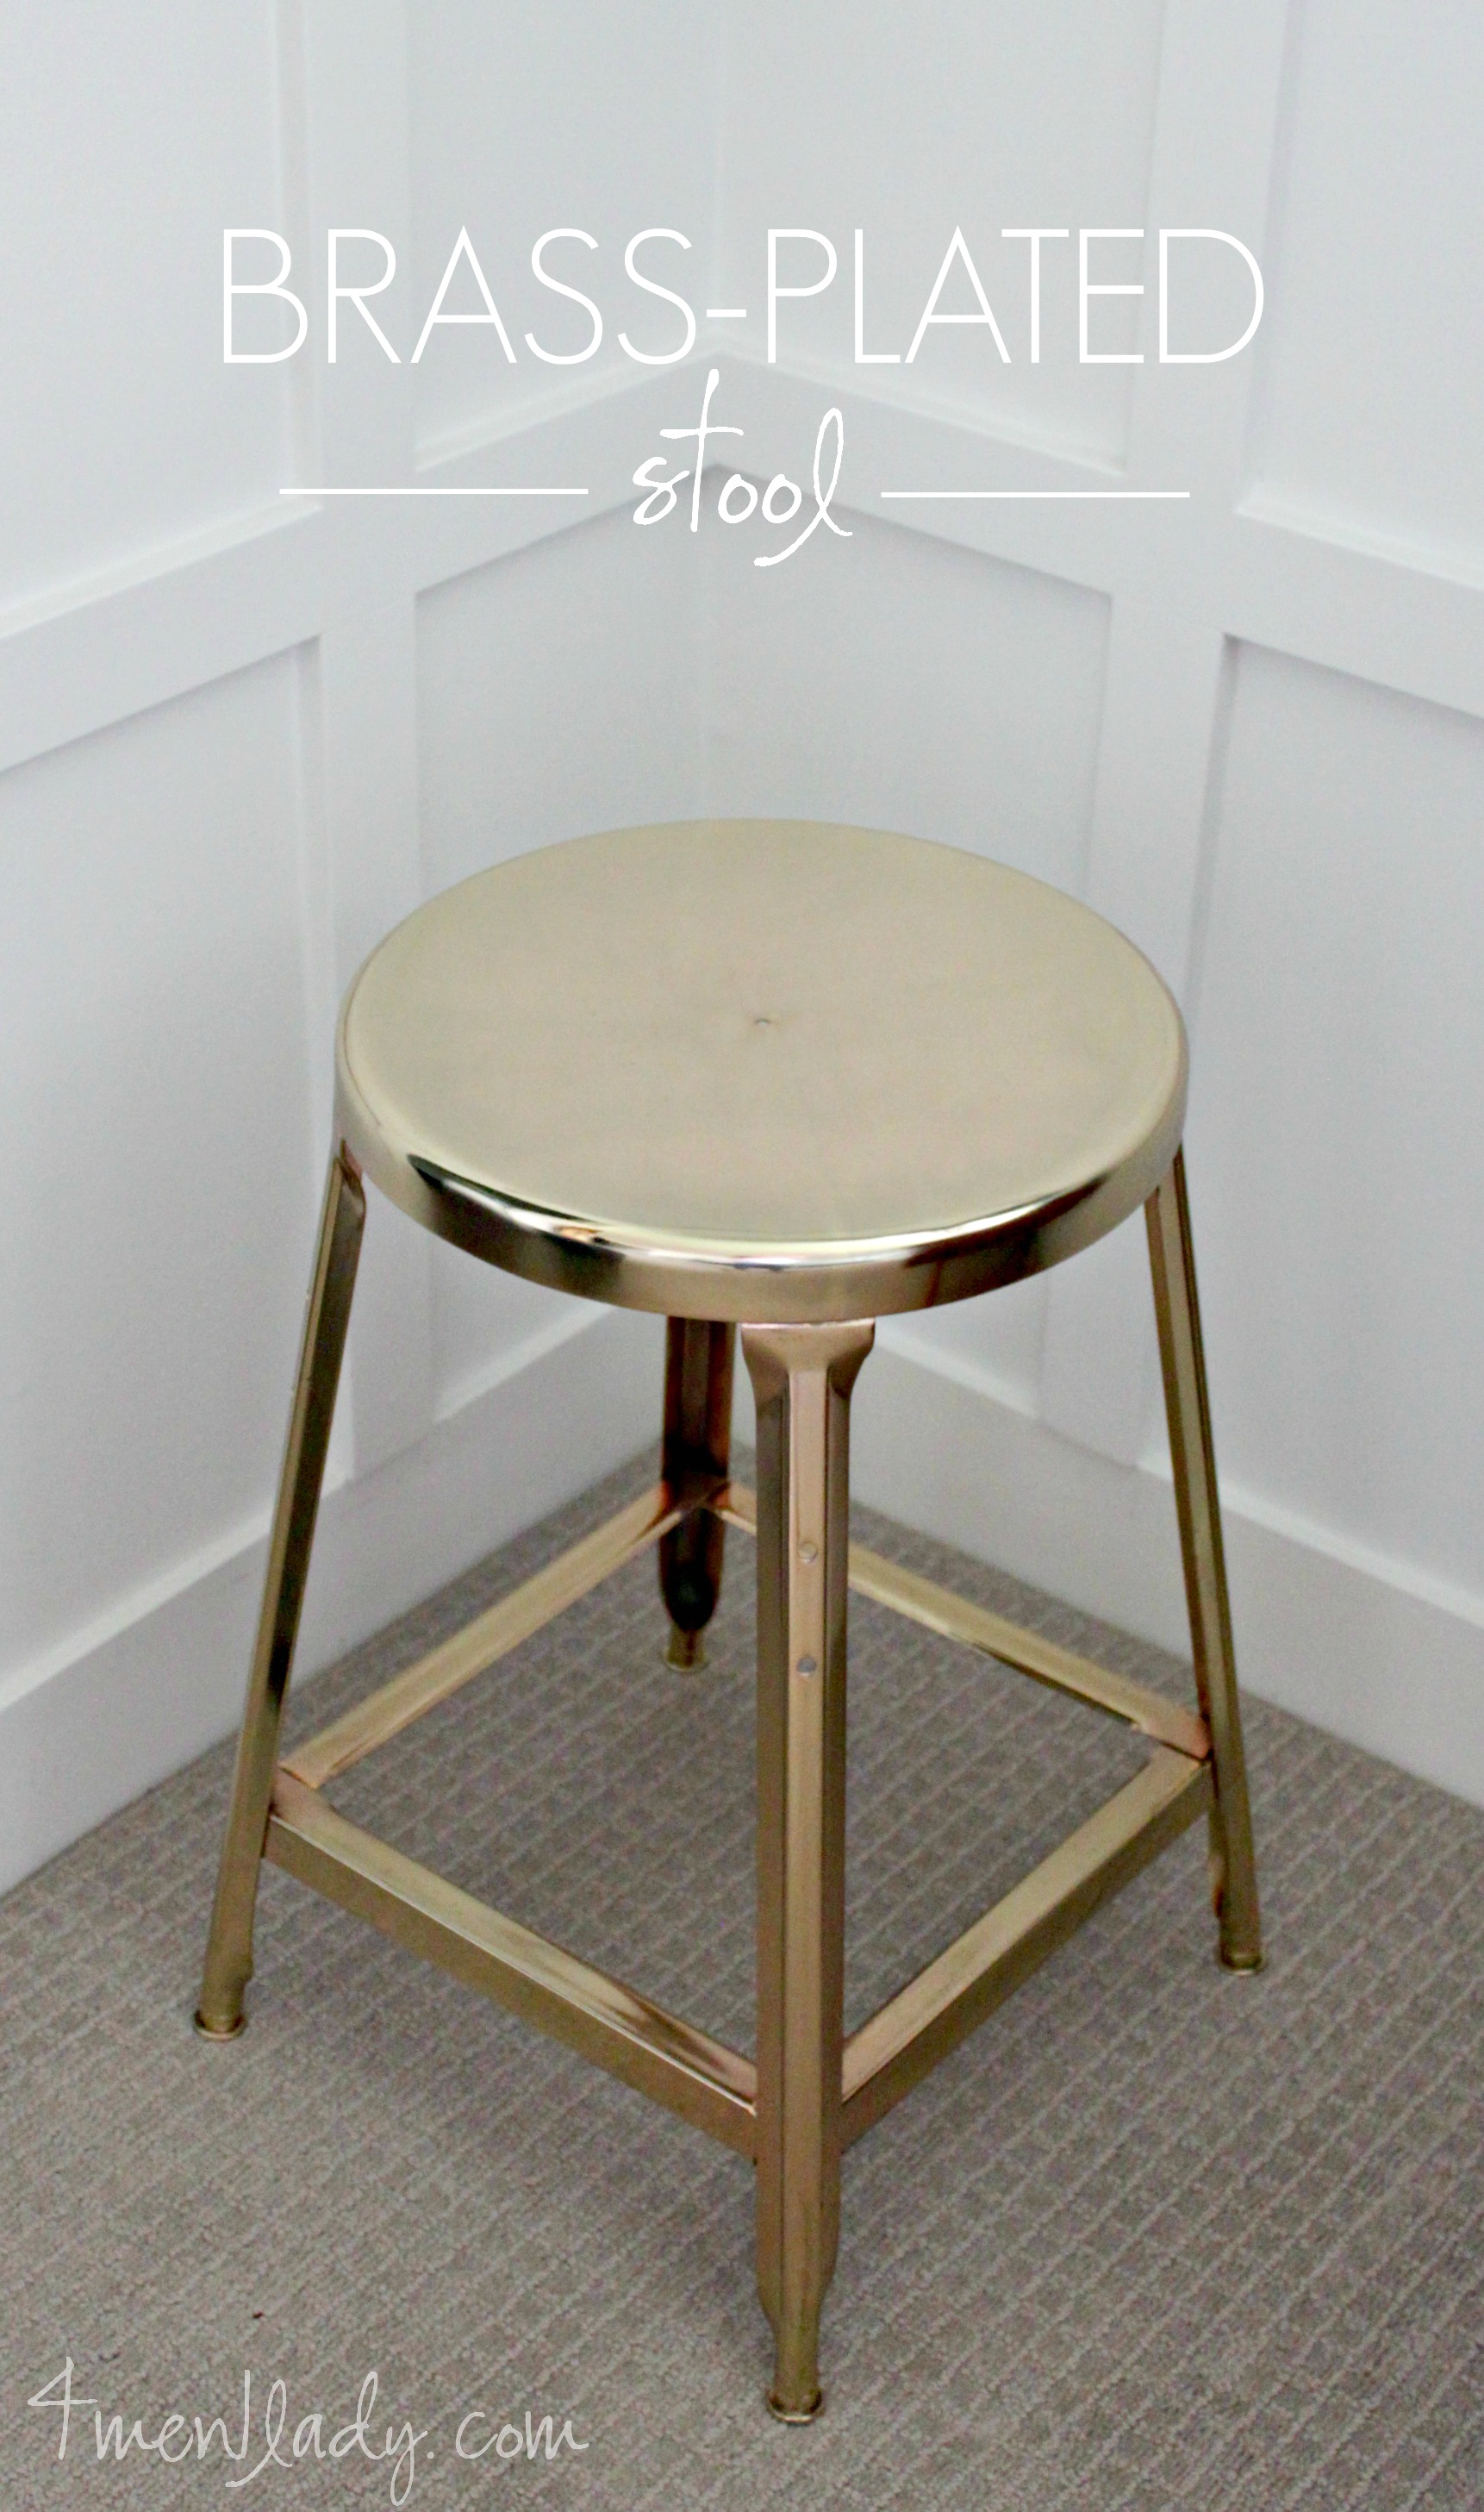 Brass plated stool.